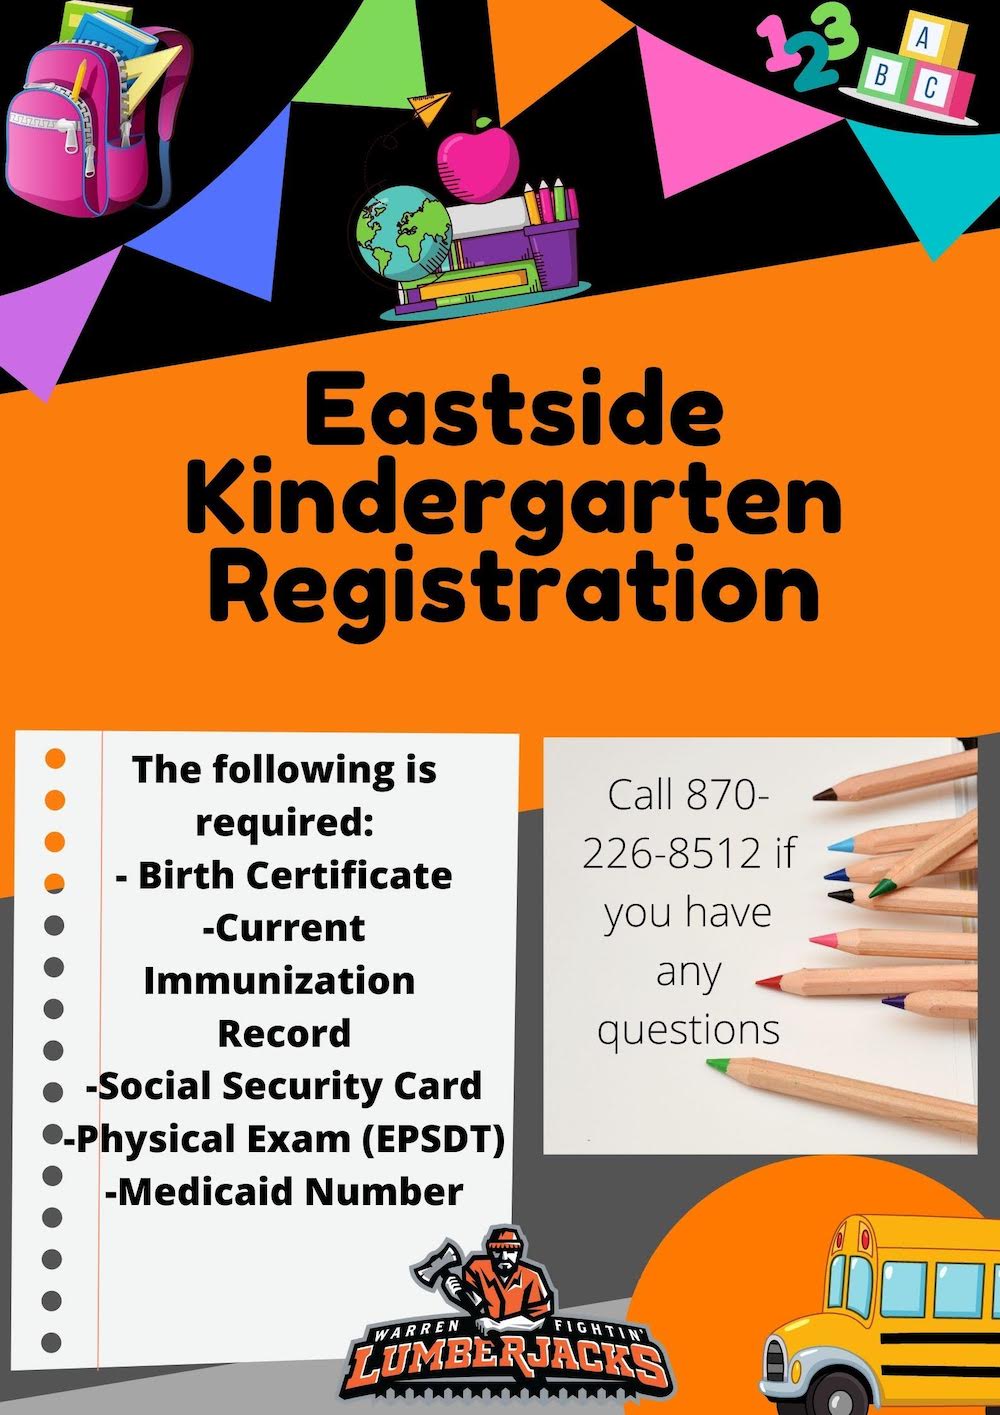 Eastside Kindergarten Registration